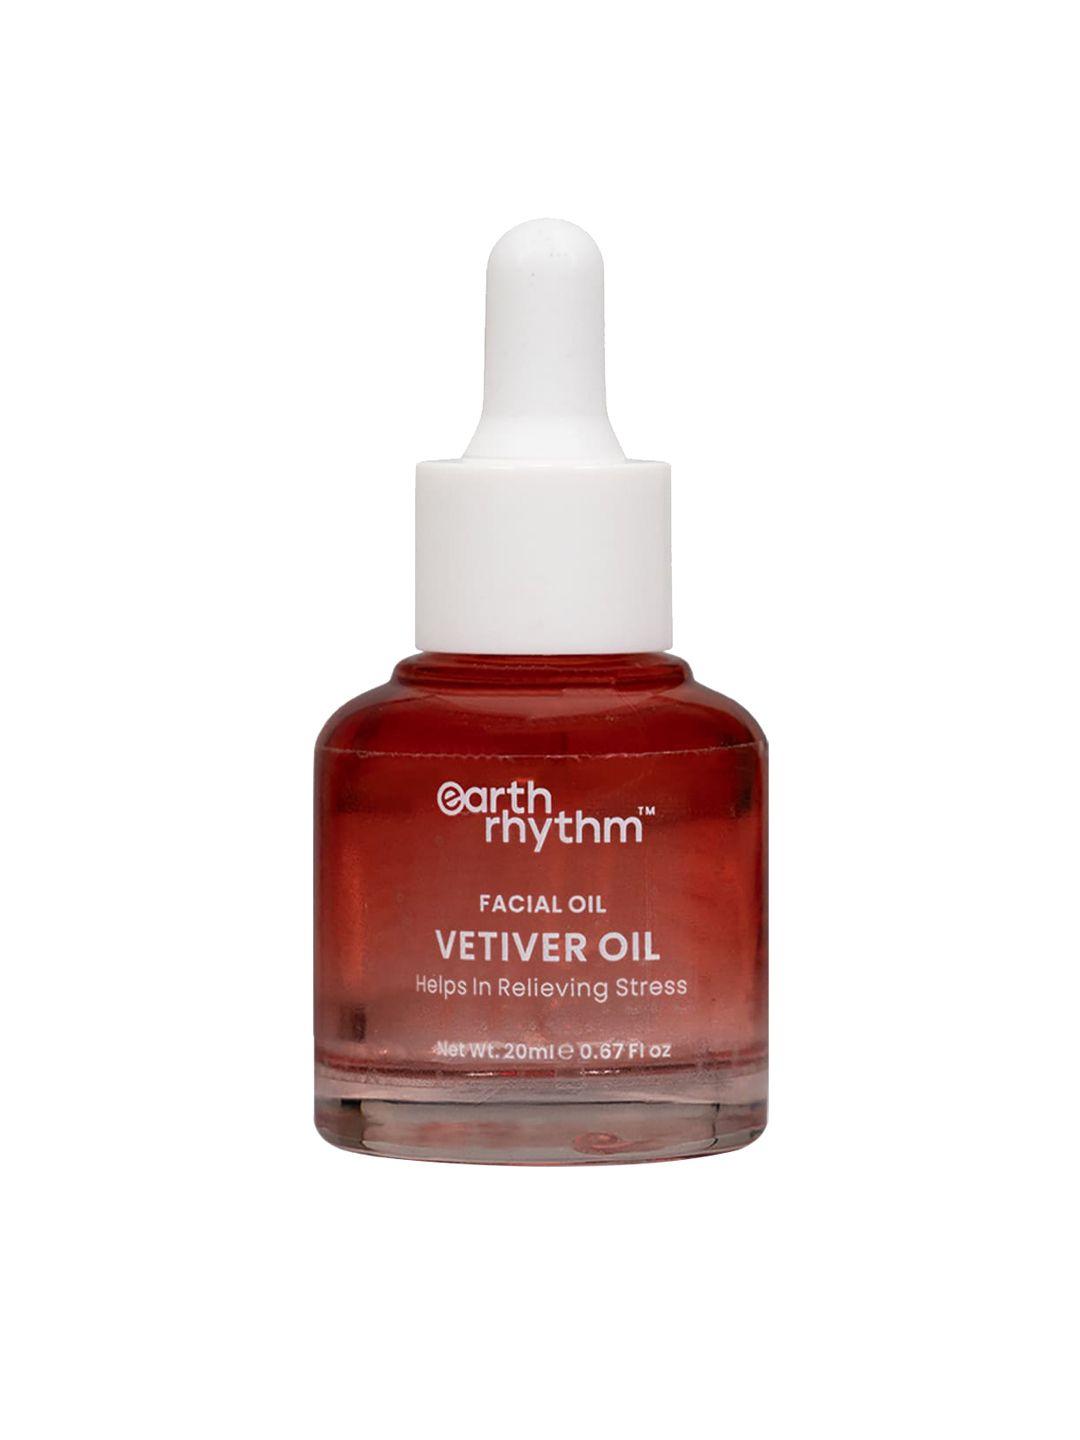 earth rhythm vetiver facial oil with vitamin e & jojoba oil - 20 ml